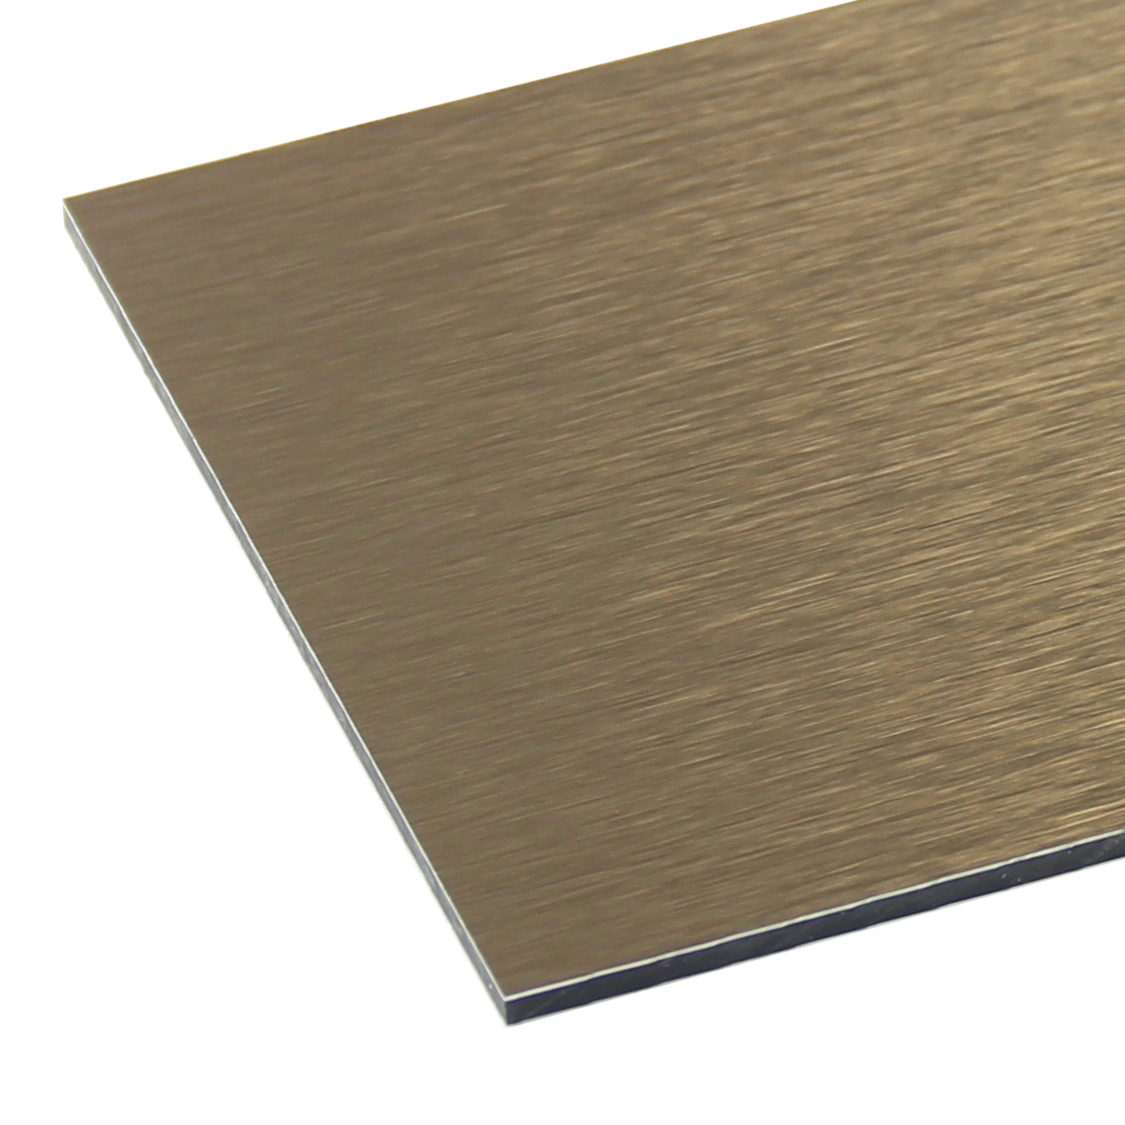 Alupanel Brushed Copper Sheet | Plastock